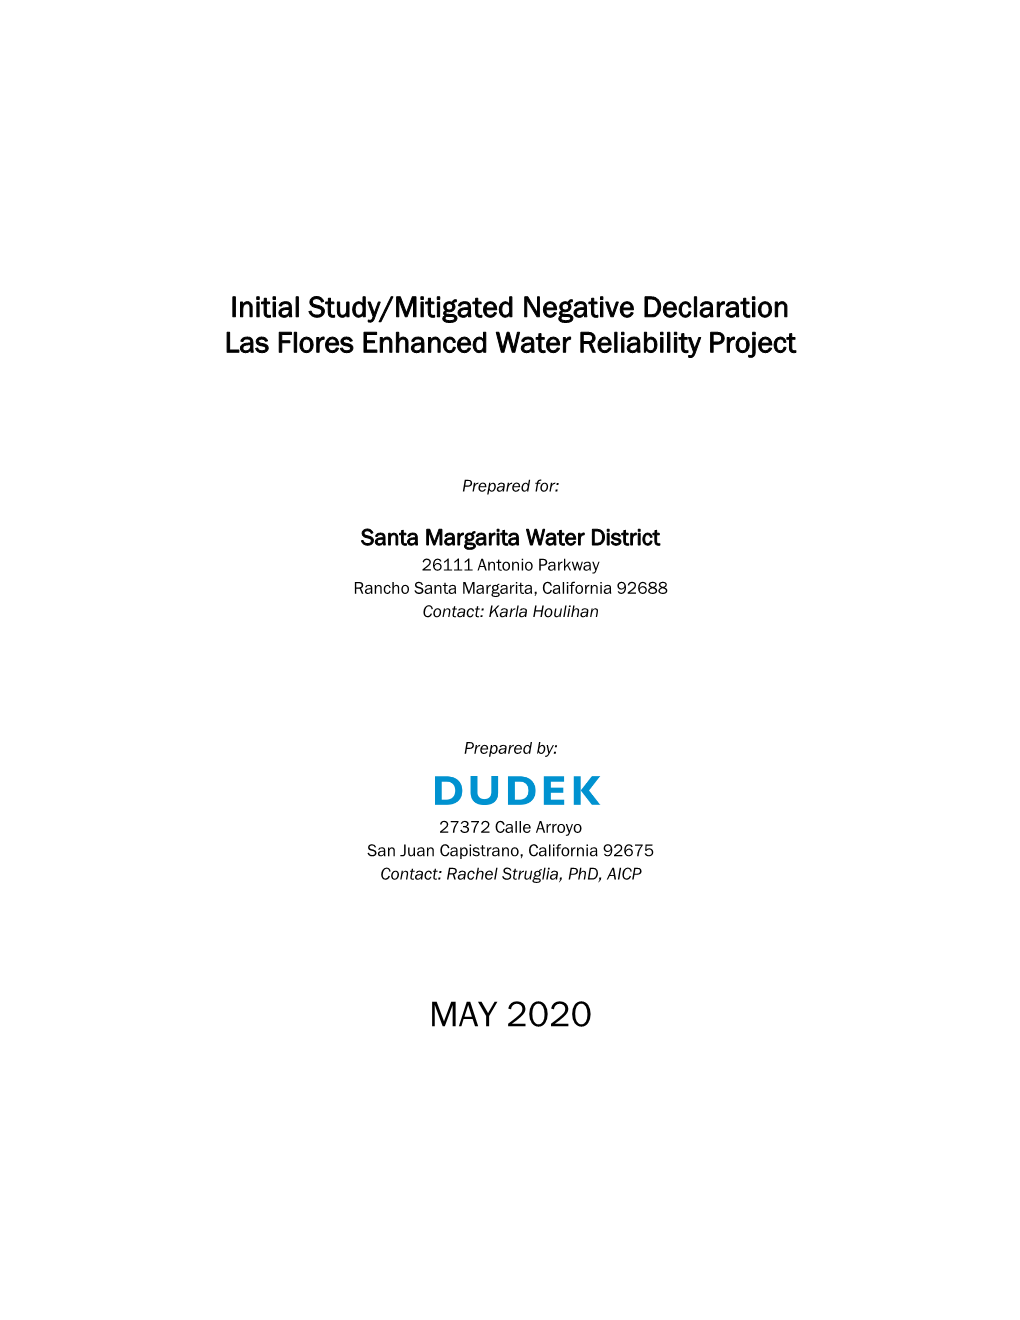 Las Flores Enhanced Water Reliability Project